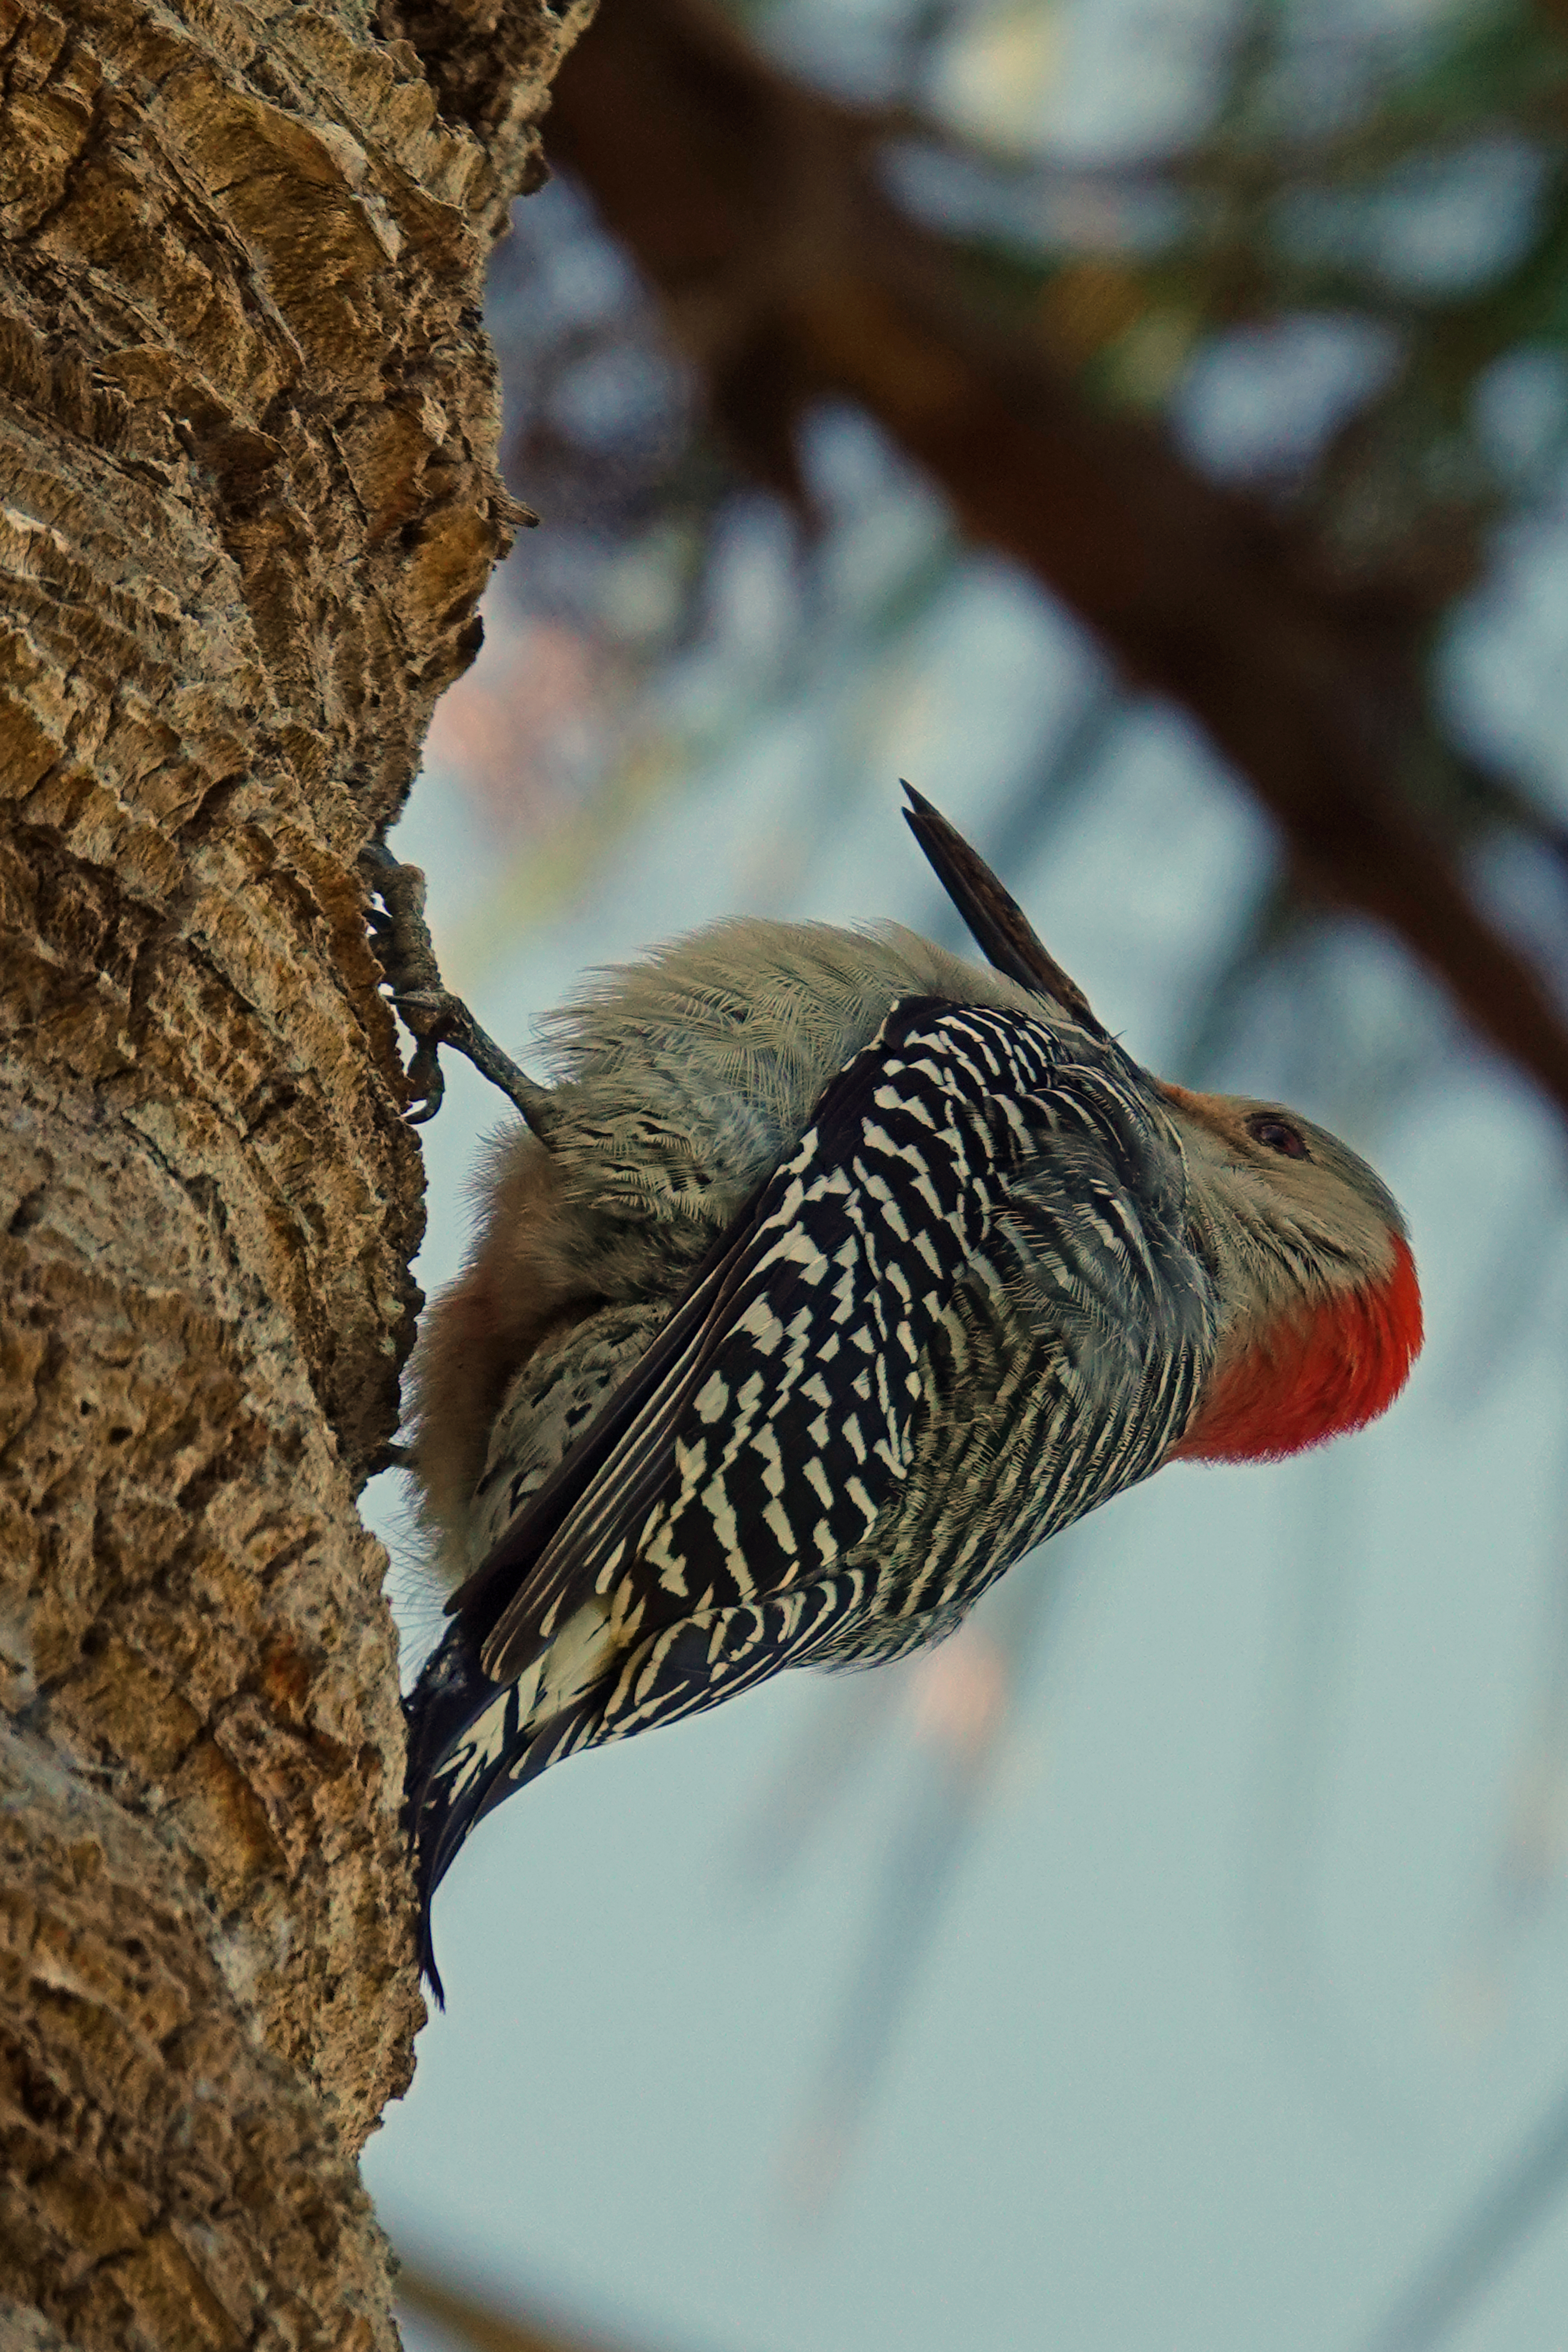 Red-bellied woodpecker  -  Naples Botanical Garden, Naples, Florida  